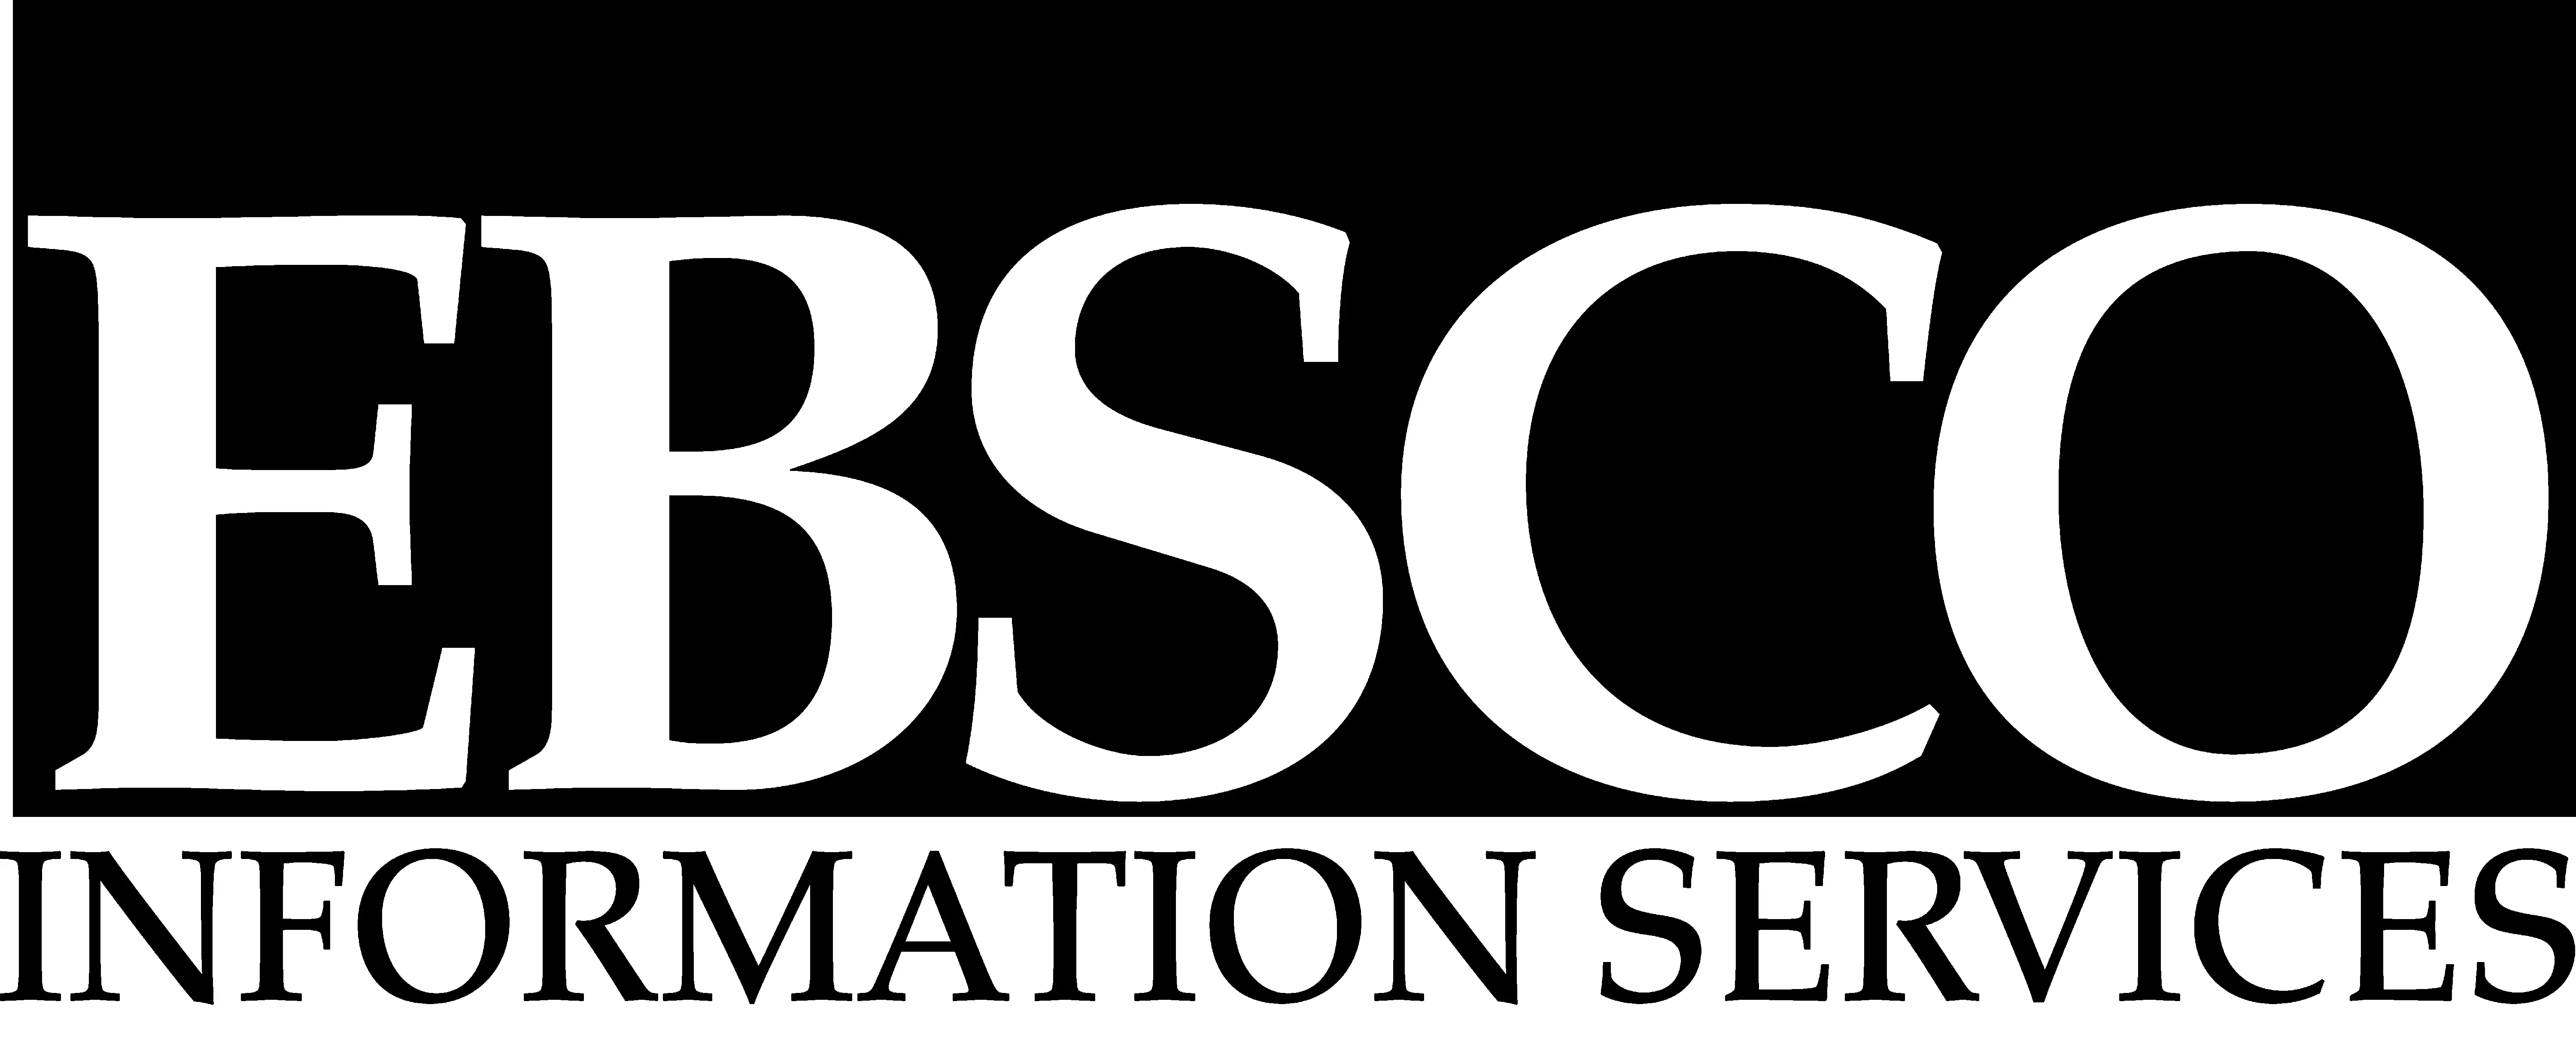 logo EBSCO